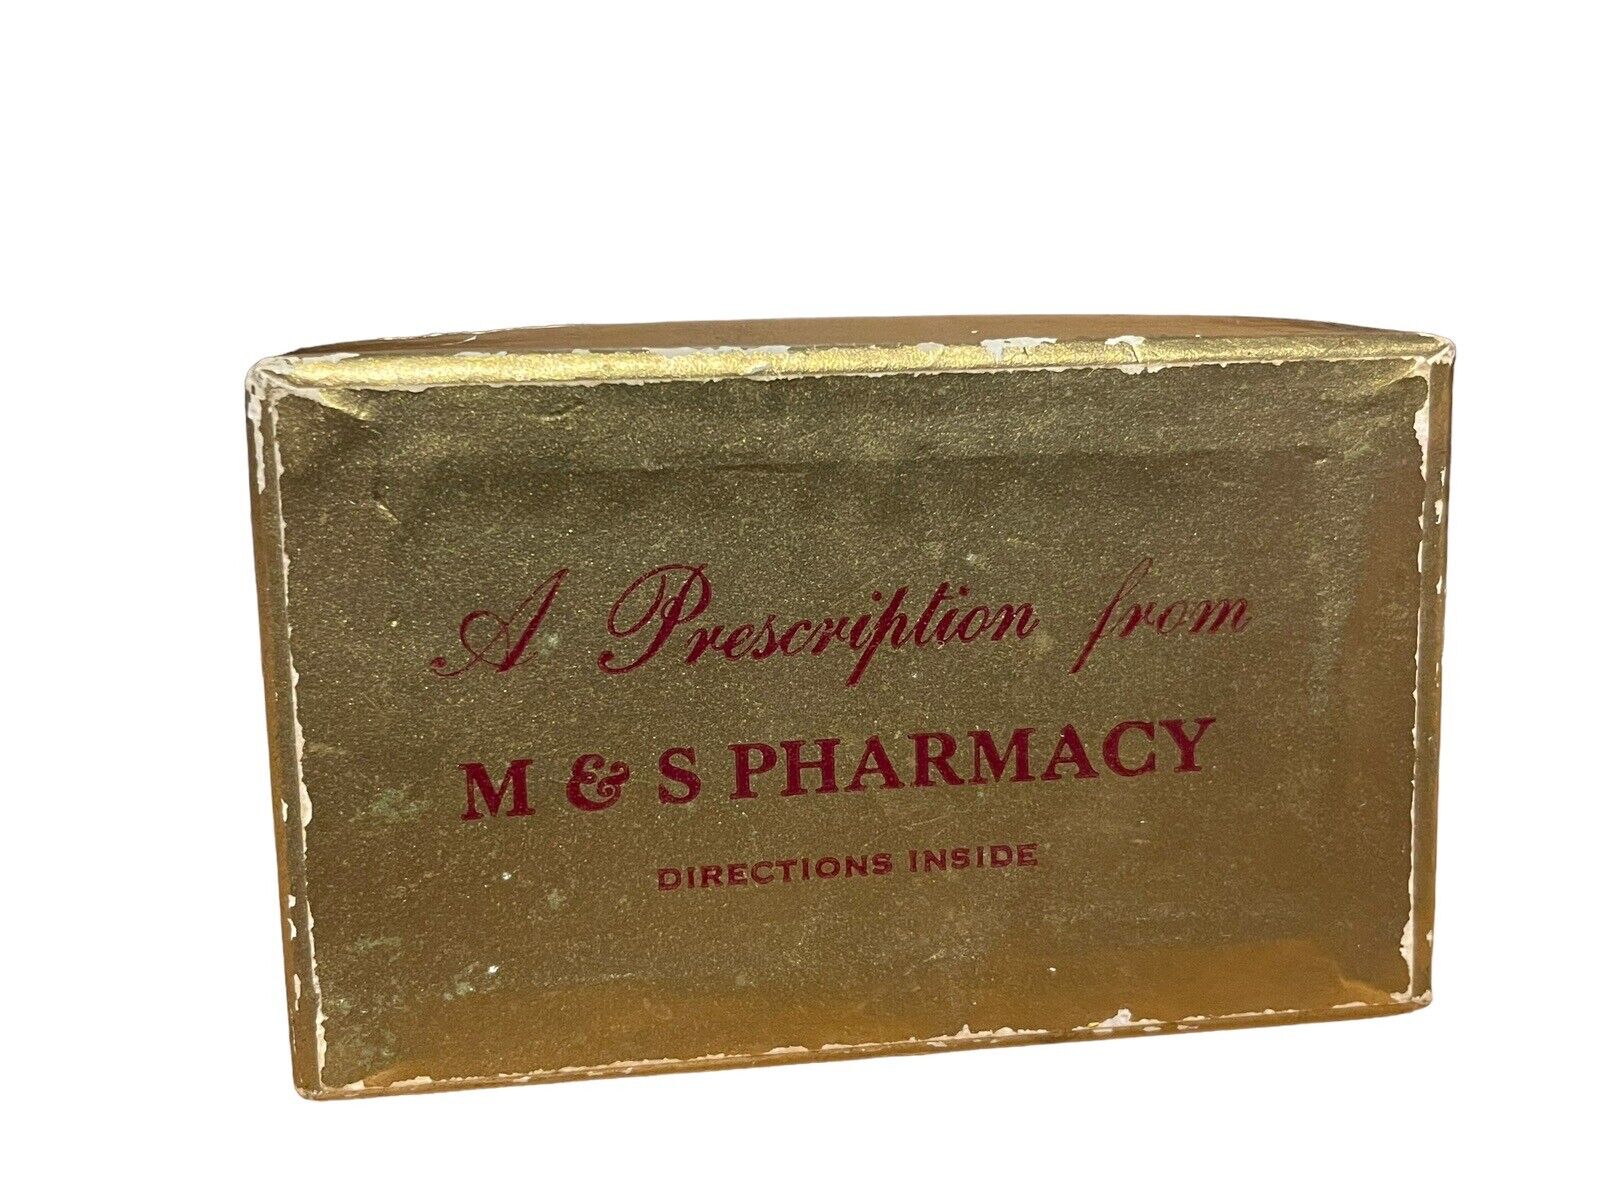 1955 M&S Pharmacy Prescription Box Dallas,TX 4/18/55 Gold Pill Box